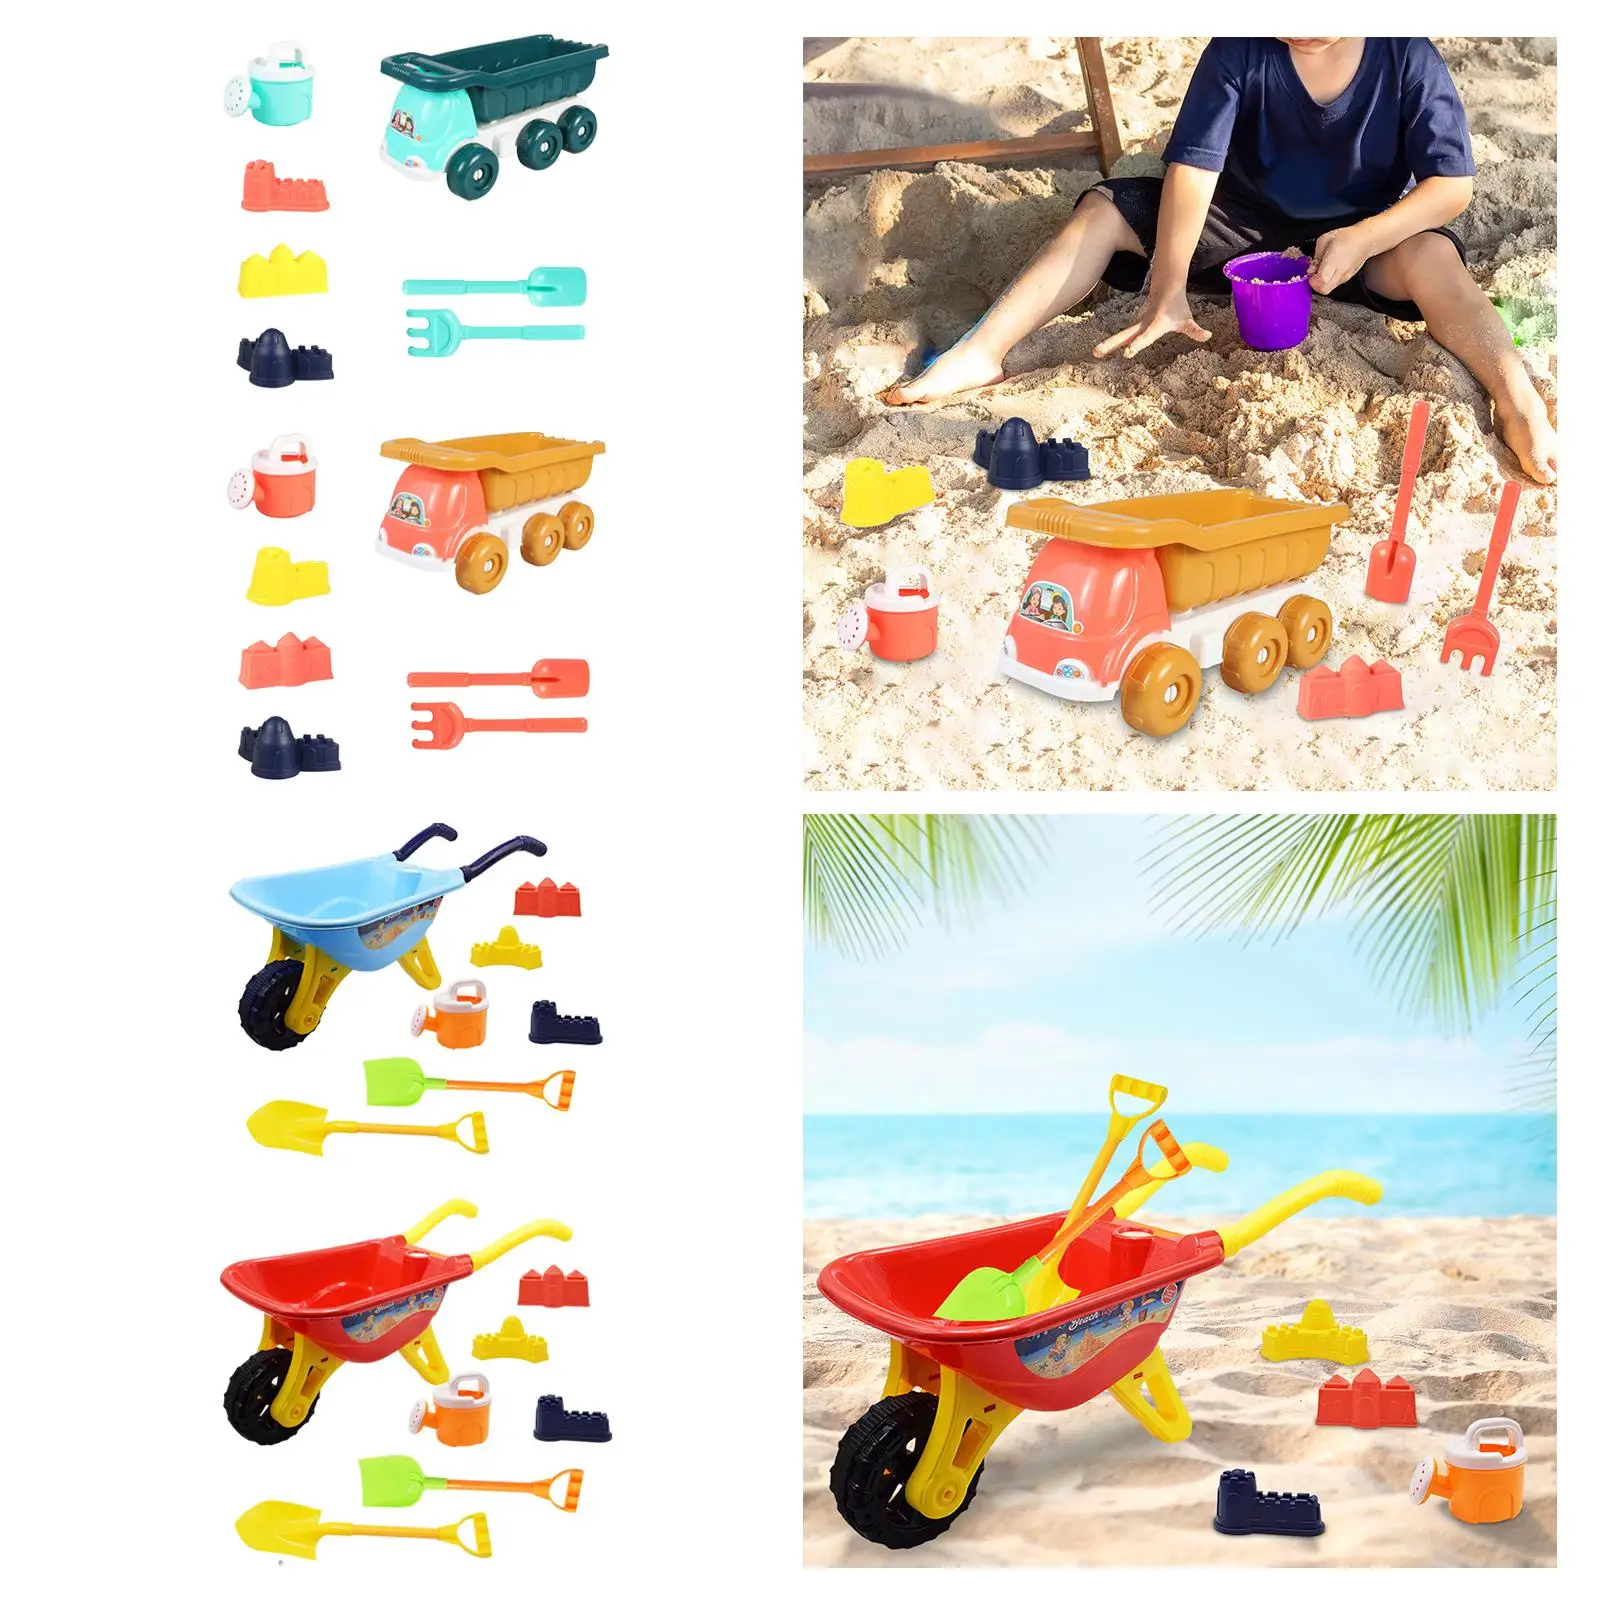 Beach beach Game play toy Sand Toy Set Beach Toy Set Wheelbarrow Gardening Tool Toy for Children Yard Indoor Outdoor Seaside